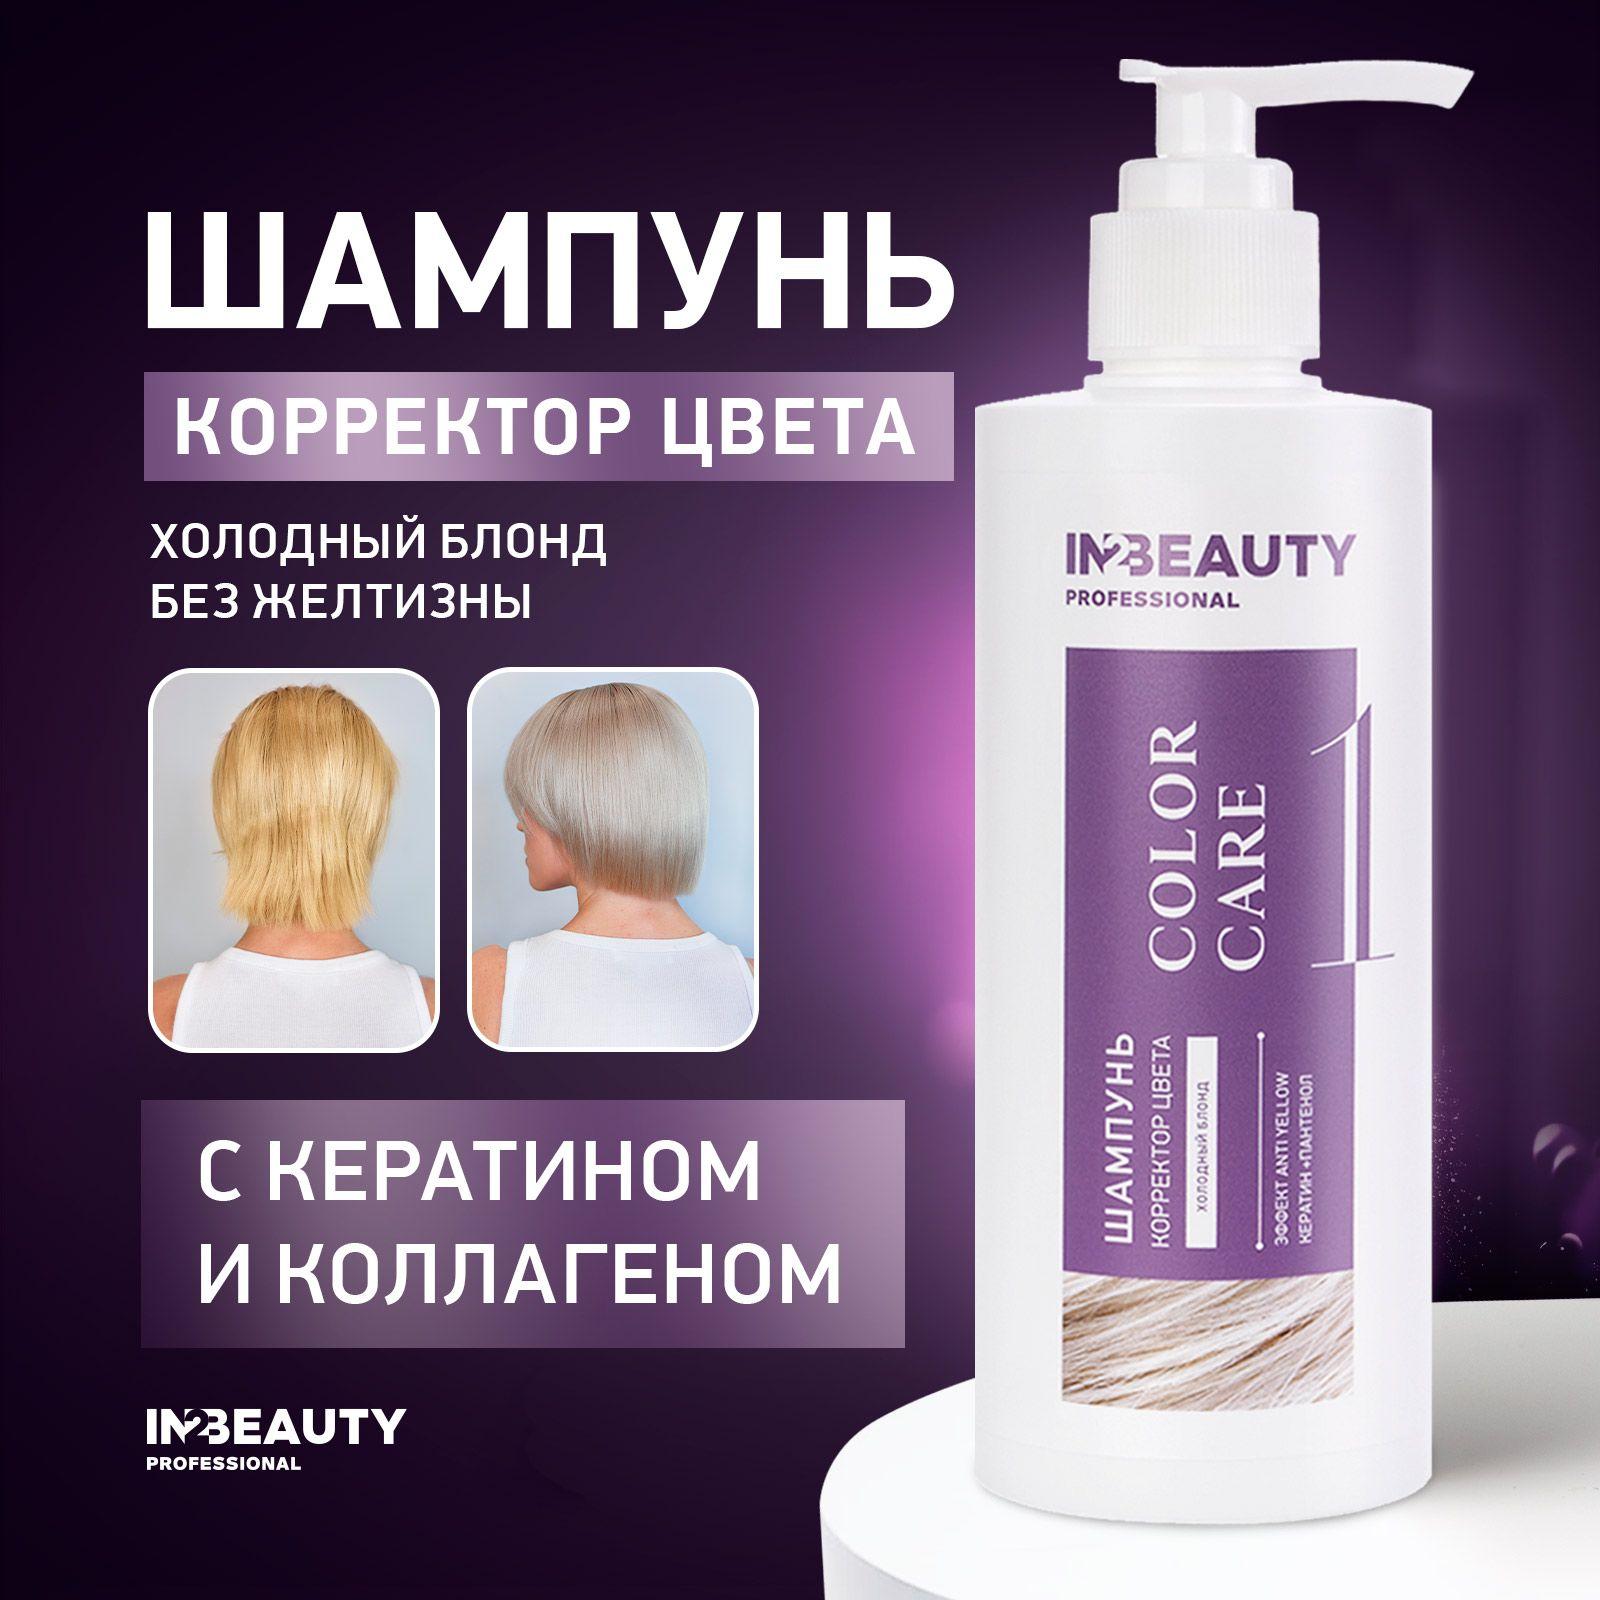 IN2BEAUTY Professional | IN2BEAUTY Professional Шампунь для волос, 250 мл